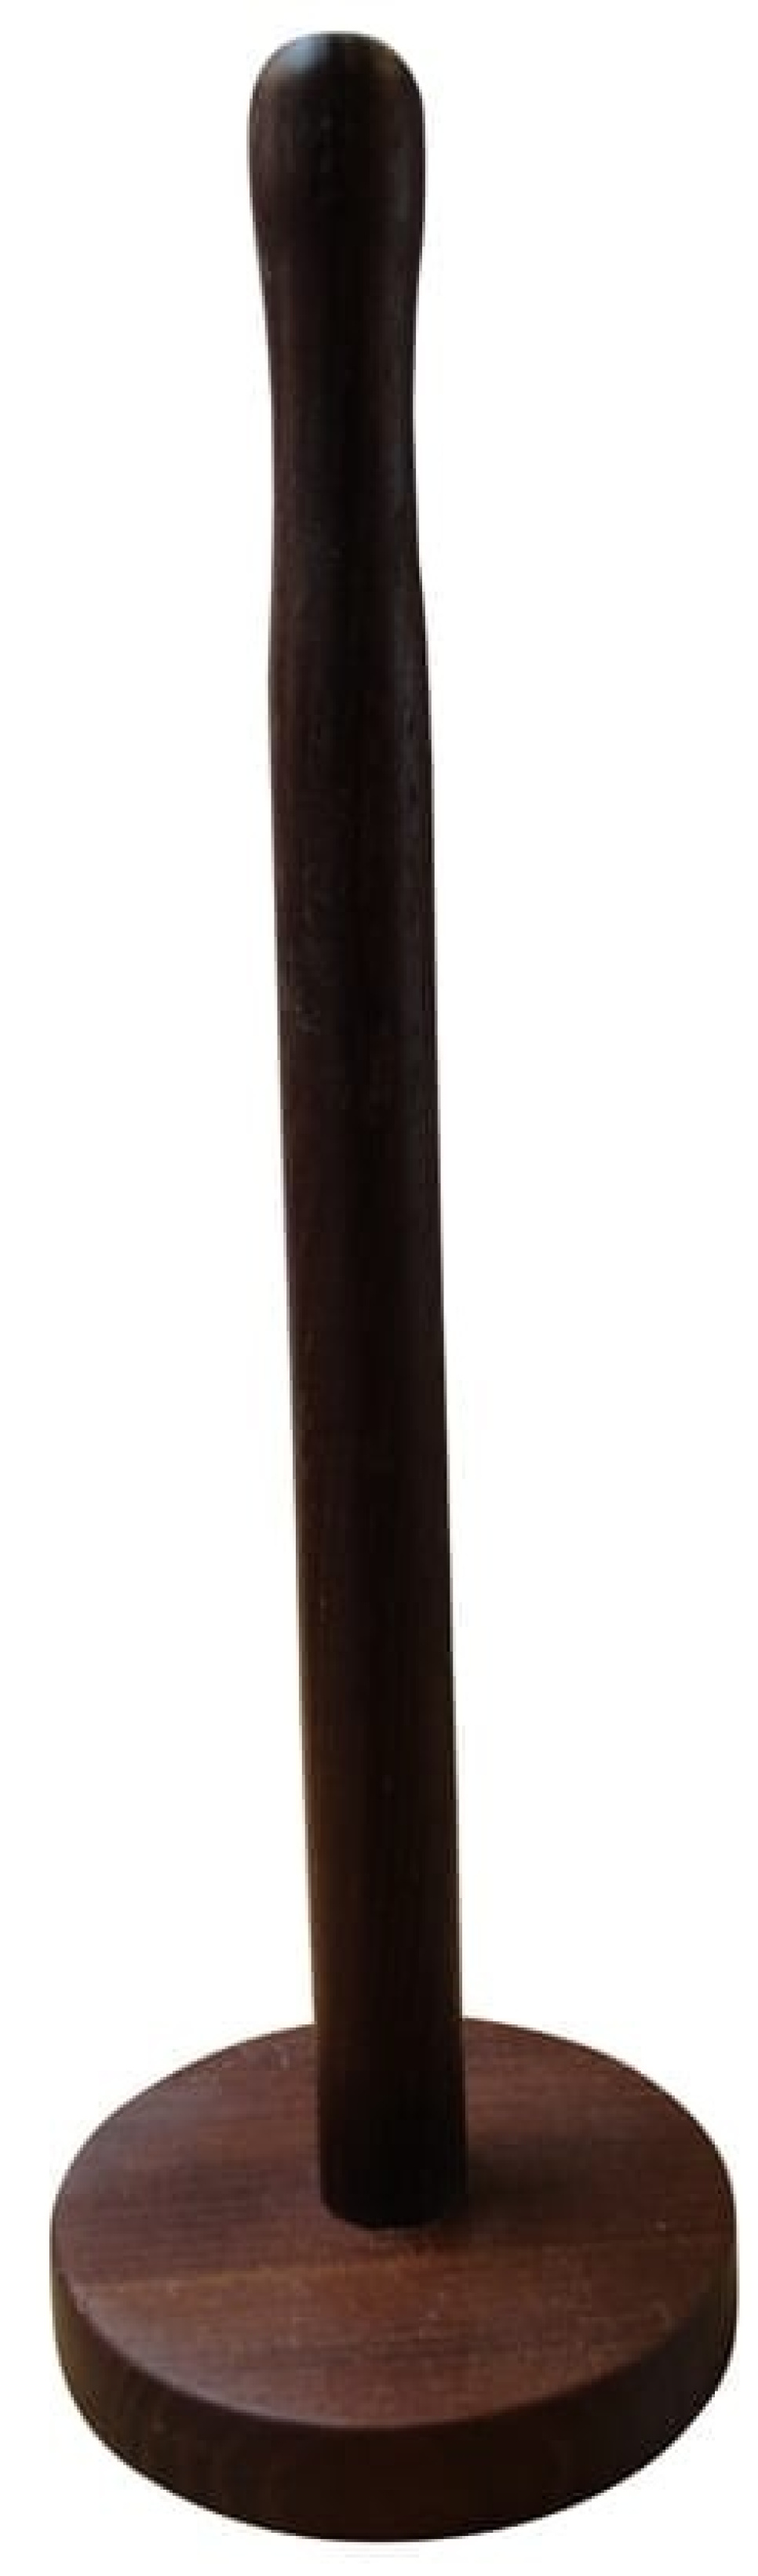 Pappershållare i akacia, 35 cm - Scanwood i gruppen Köksinredning / Renhållning hos KitchenLab (1451-13296)